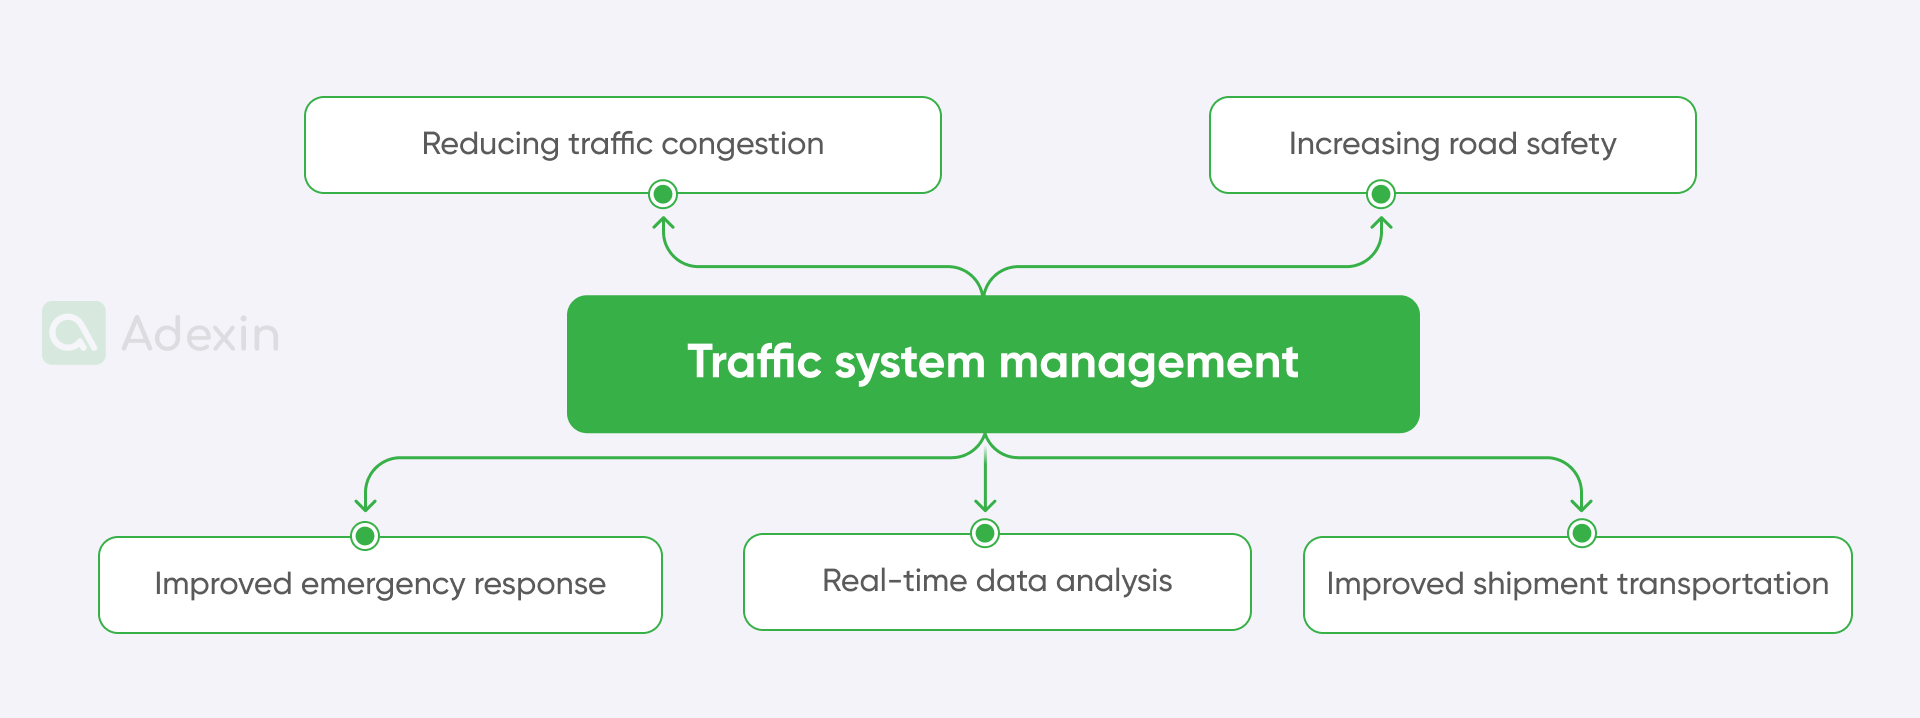 Benefits of traffic system management